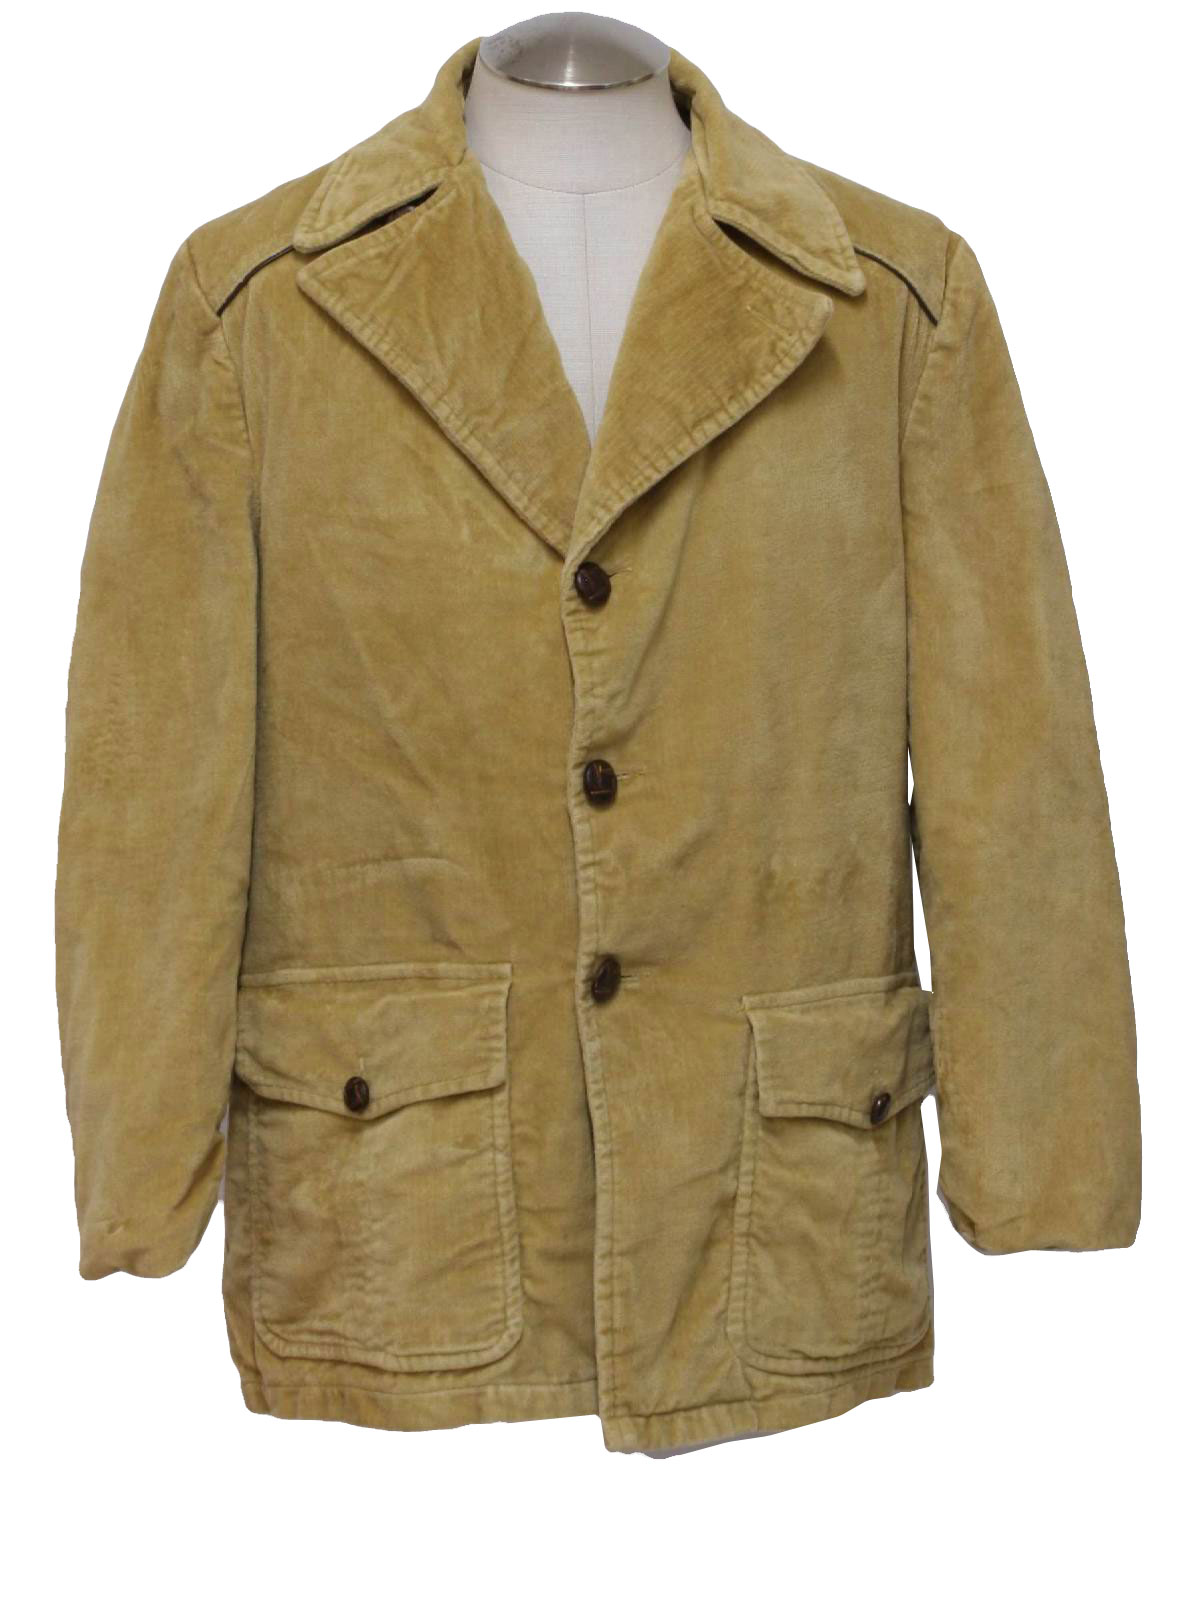 Vintage 70s Jacket: 70s -Campus Outwear- Mens tan corduroy car coat ...